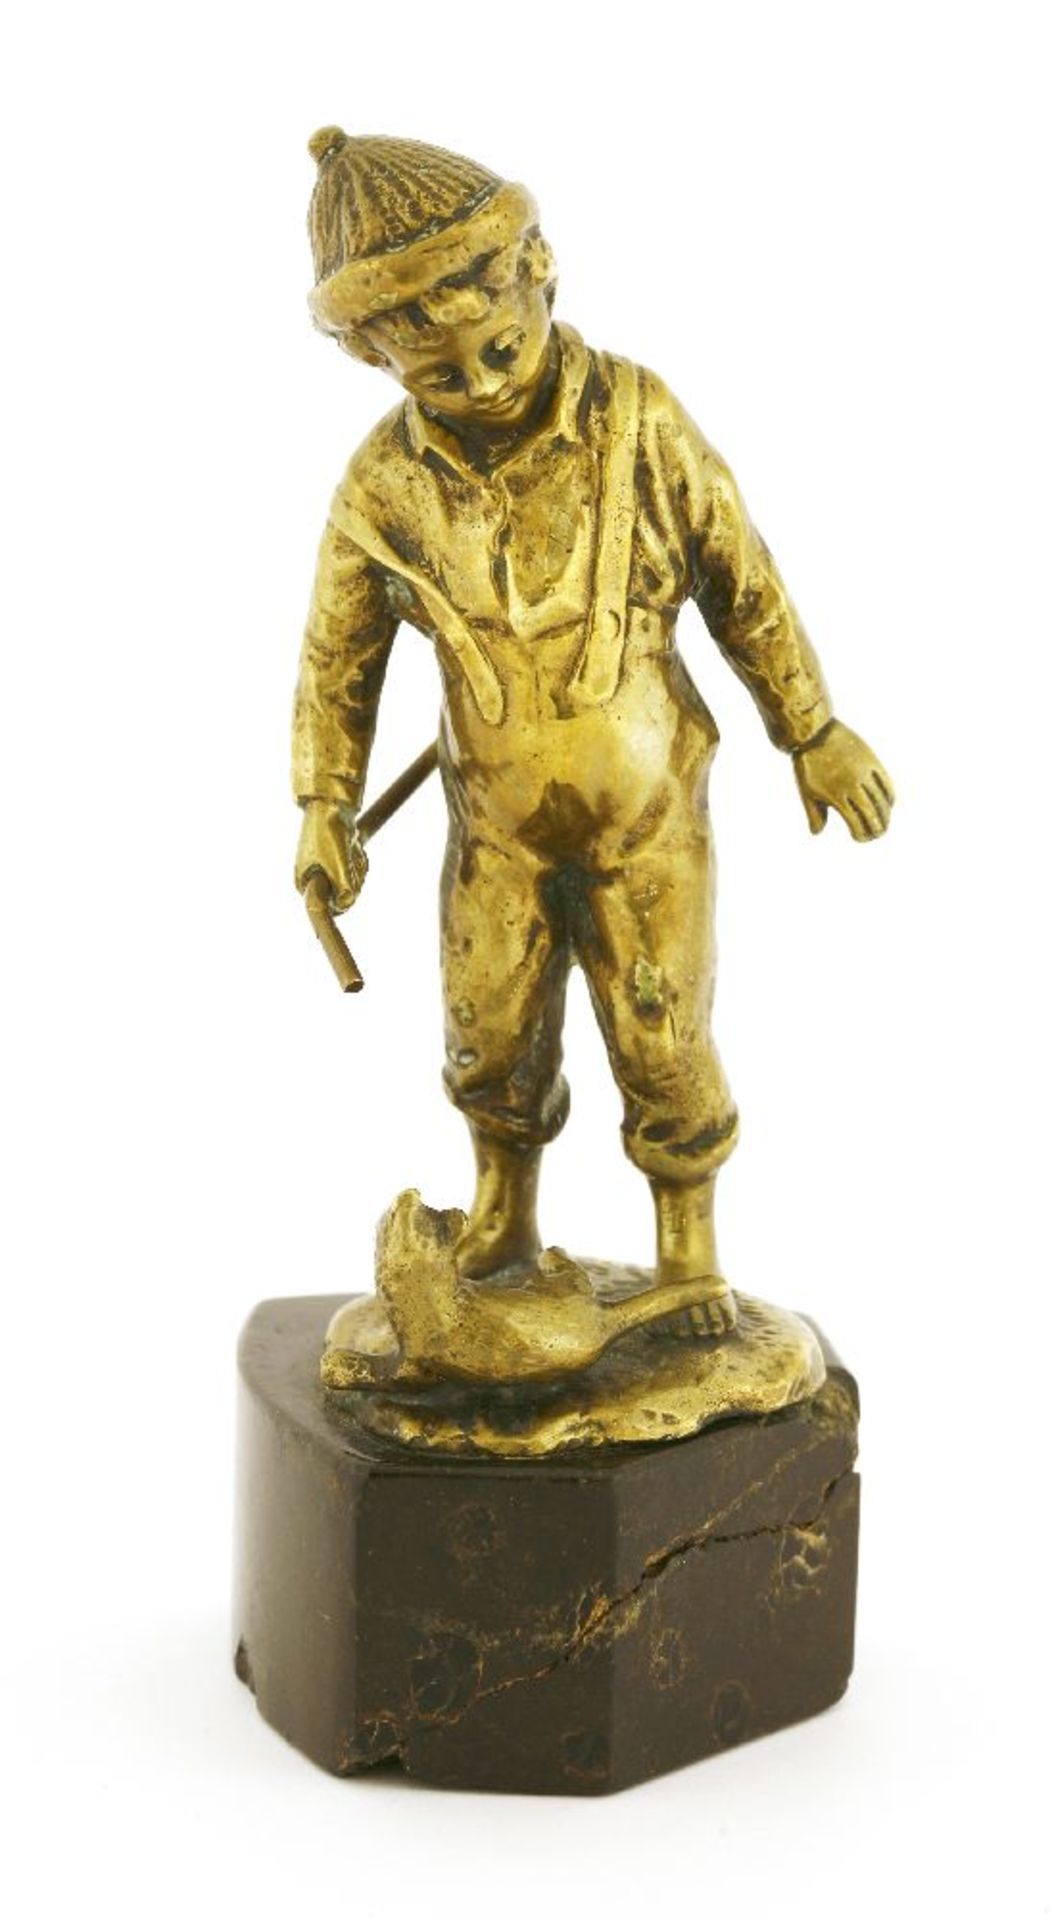 Julius Schmidt Felling (German, 1835-1920), late 19th/early 20th century, a gilt bronze sculpture of